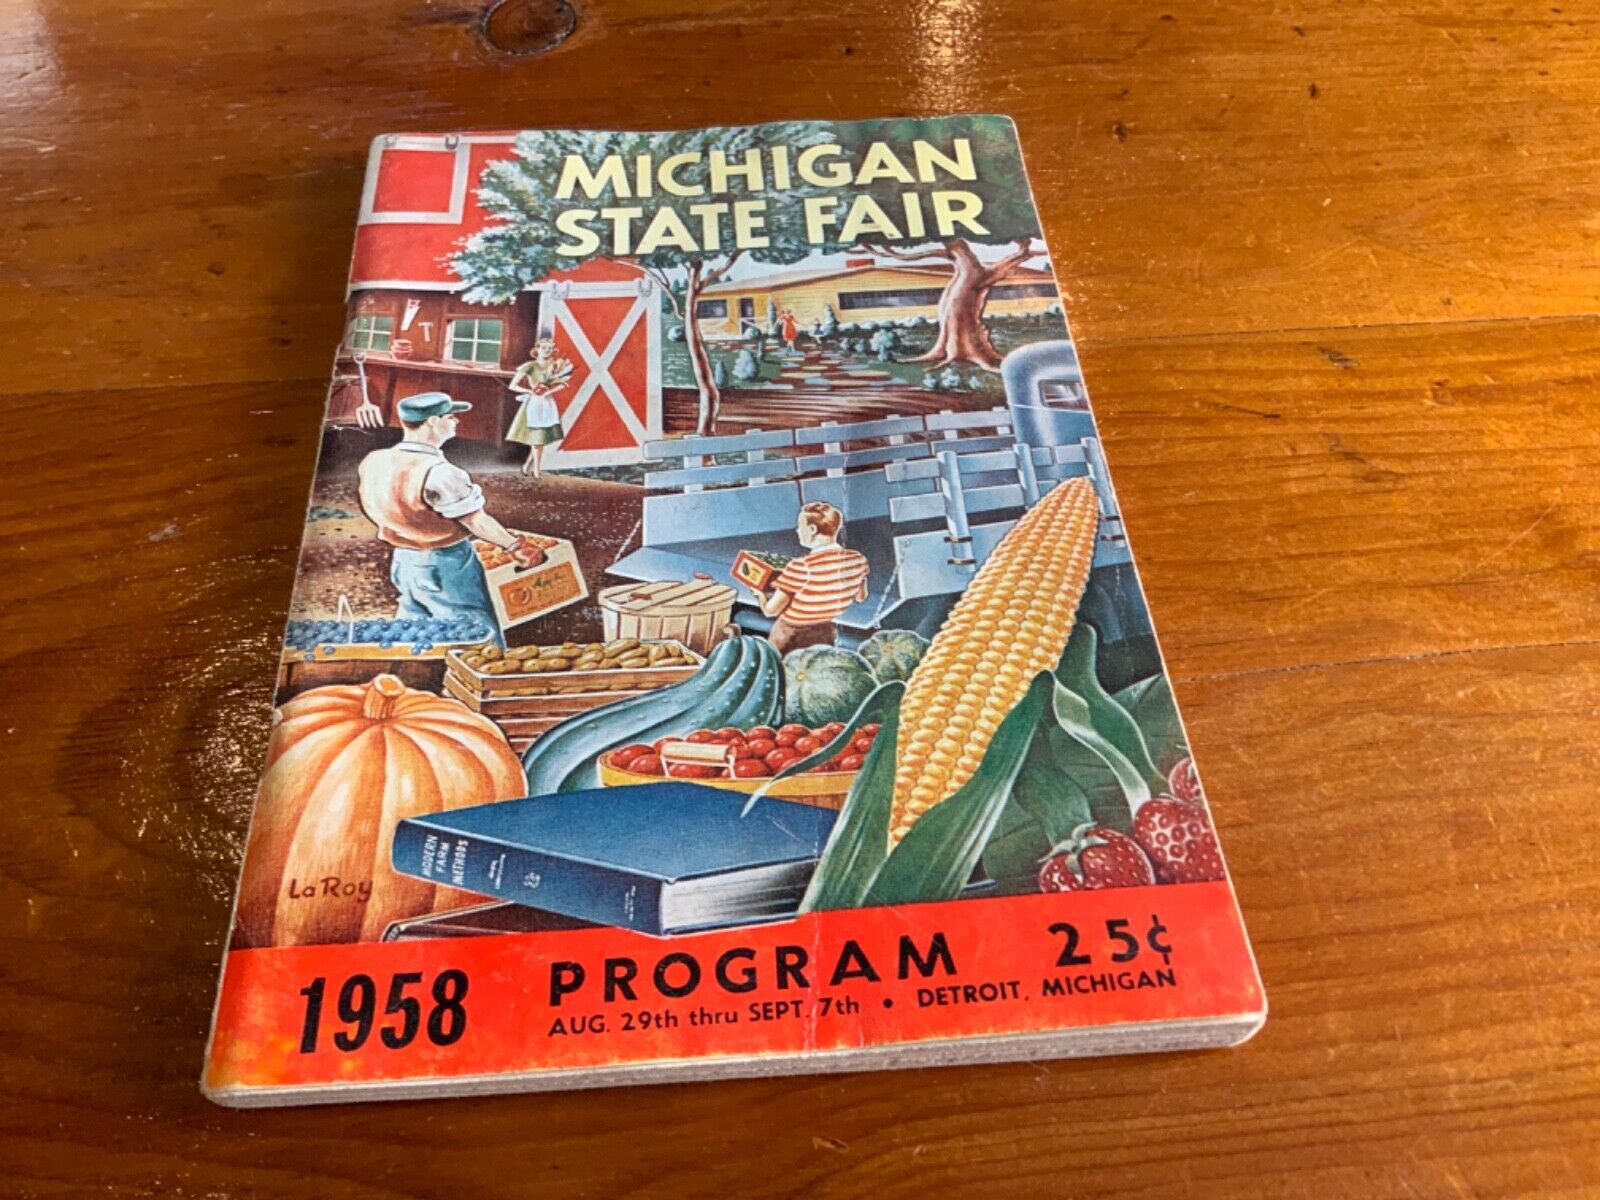 1958 Michigan State Fair Program.